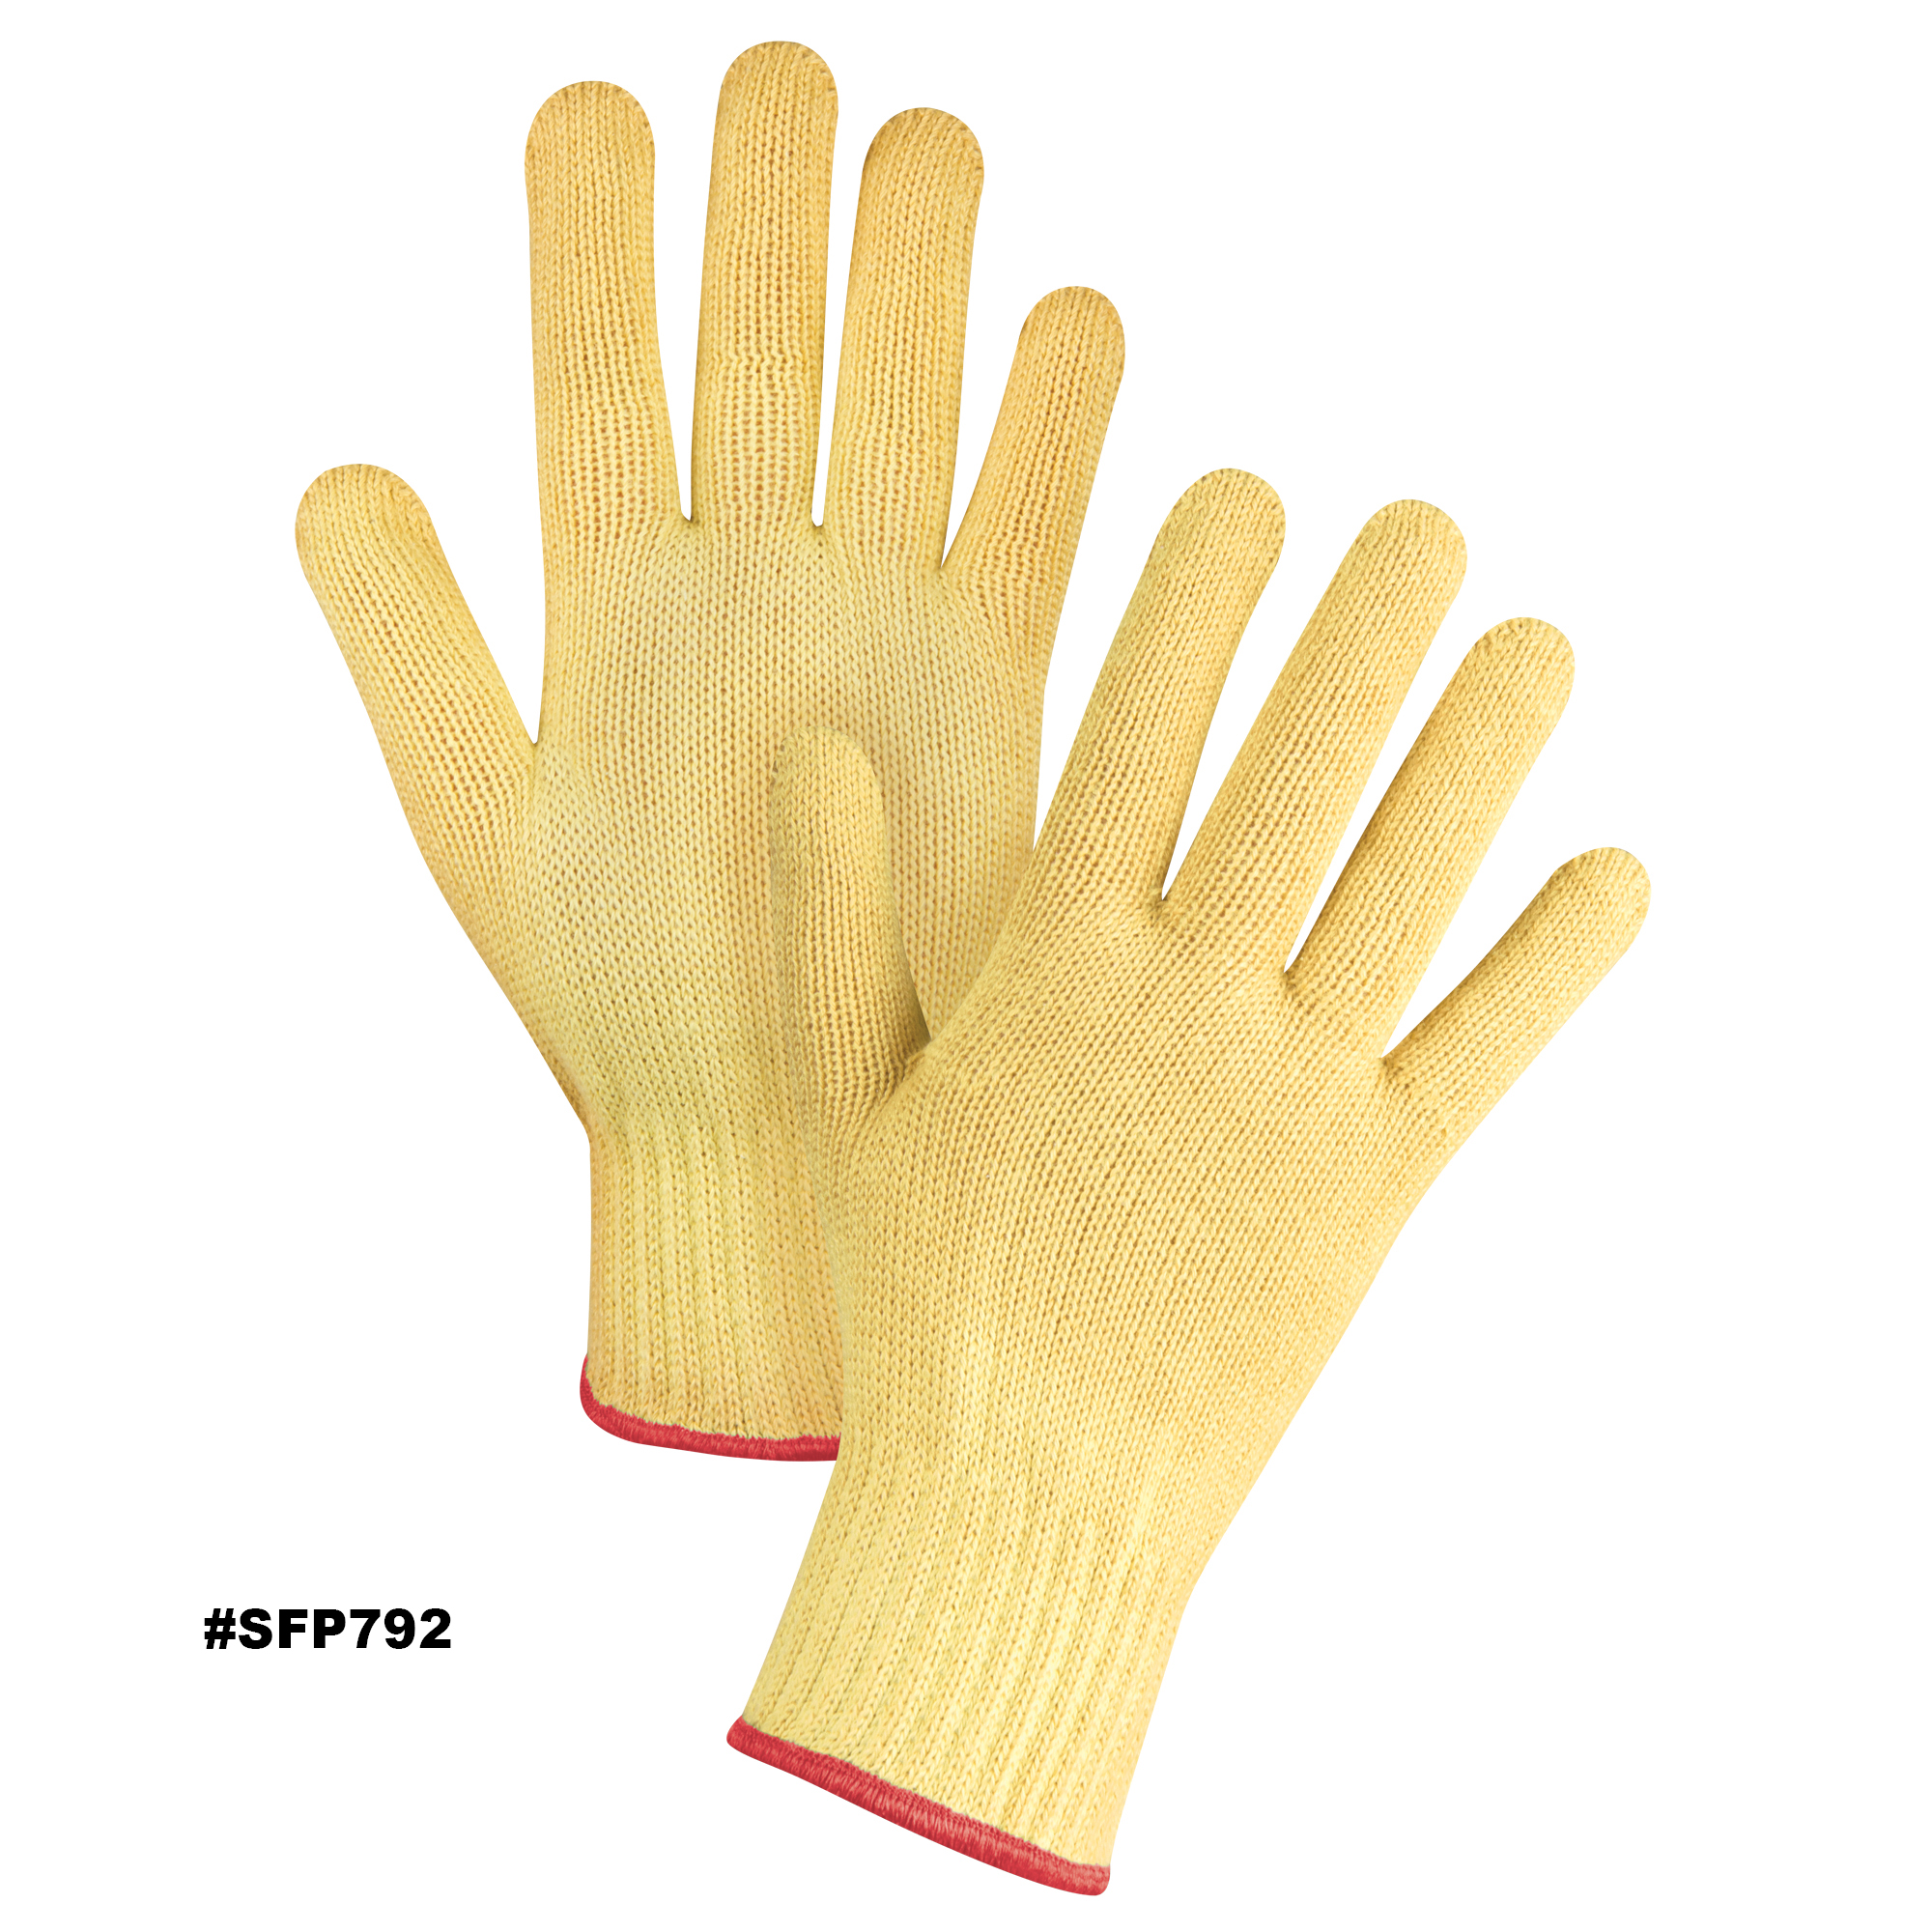 Zenith String Knit Gloves, Size Small/7, 7 Gauge, Kevlar® Shell, EN 388 Level 3/ASTM ANSI Level A2 Model: SFP792